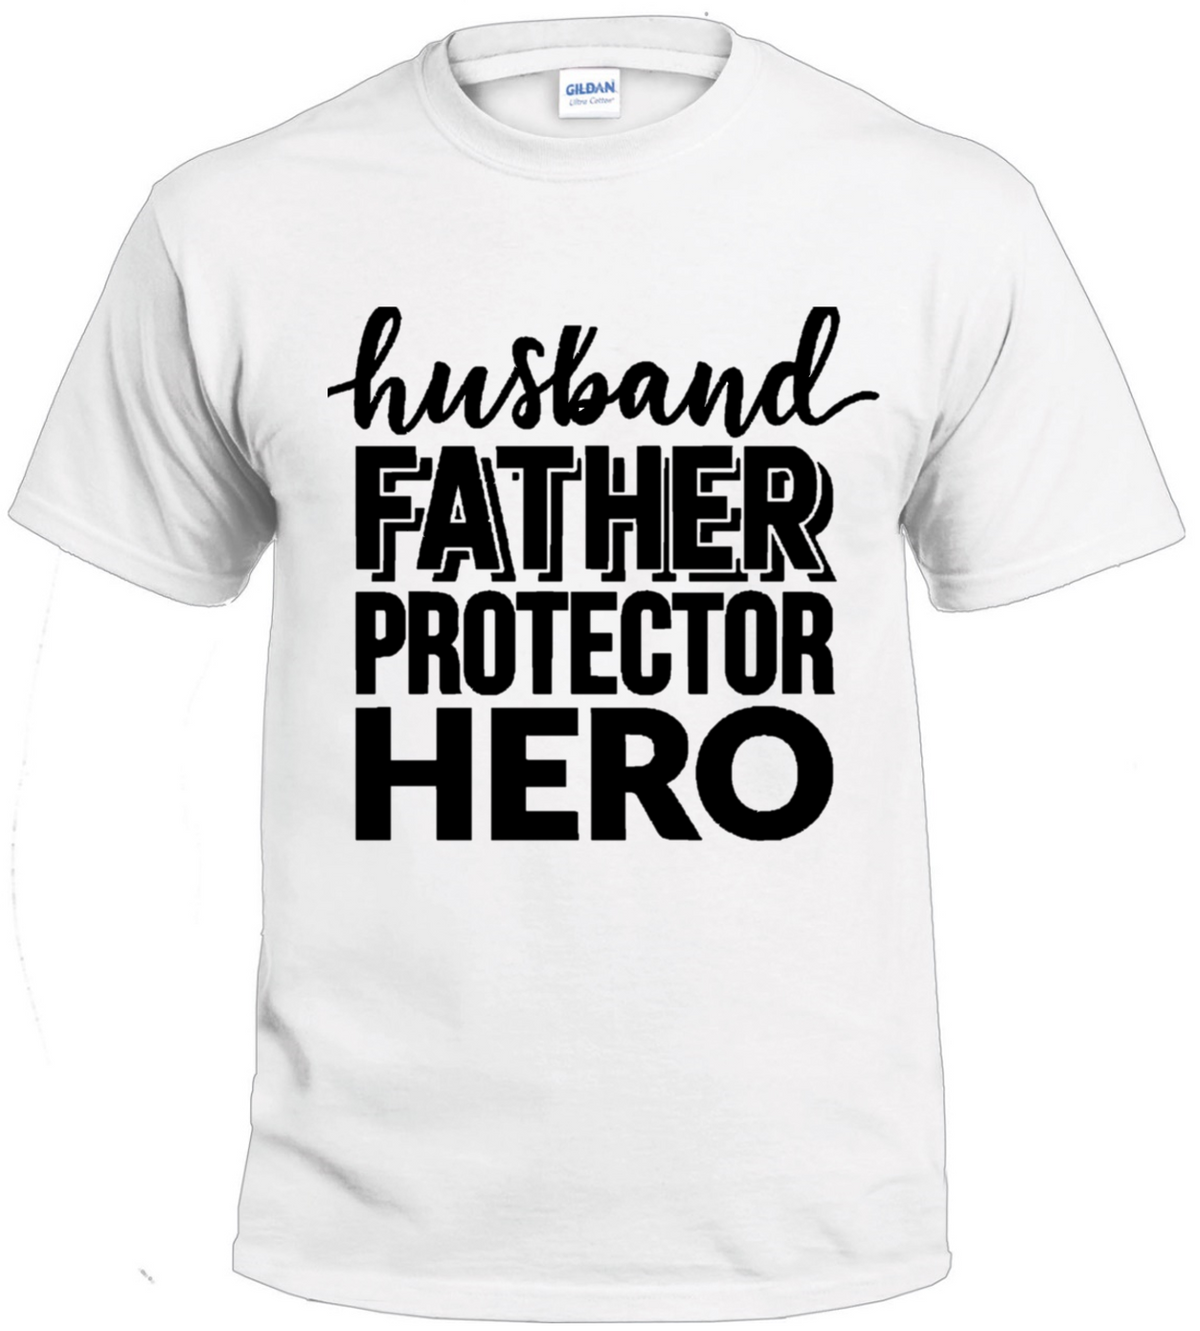 Husband Father Protector Hero t-shirt